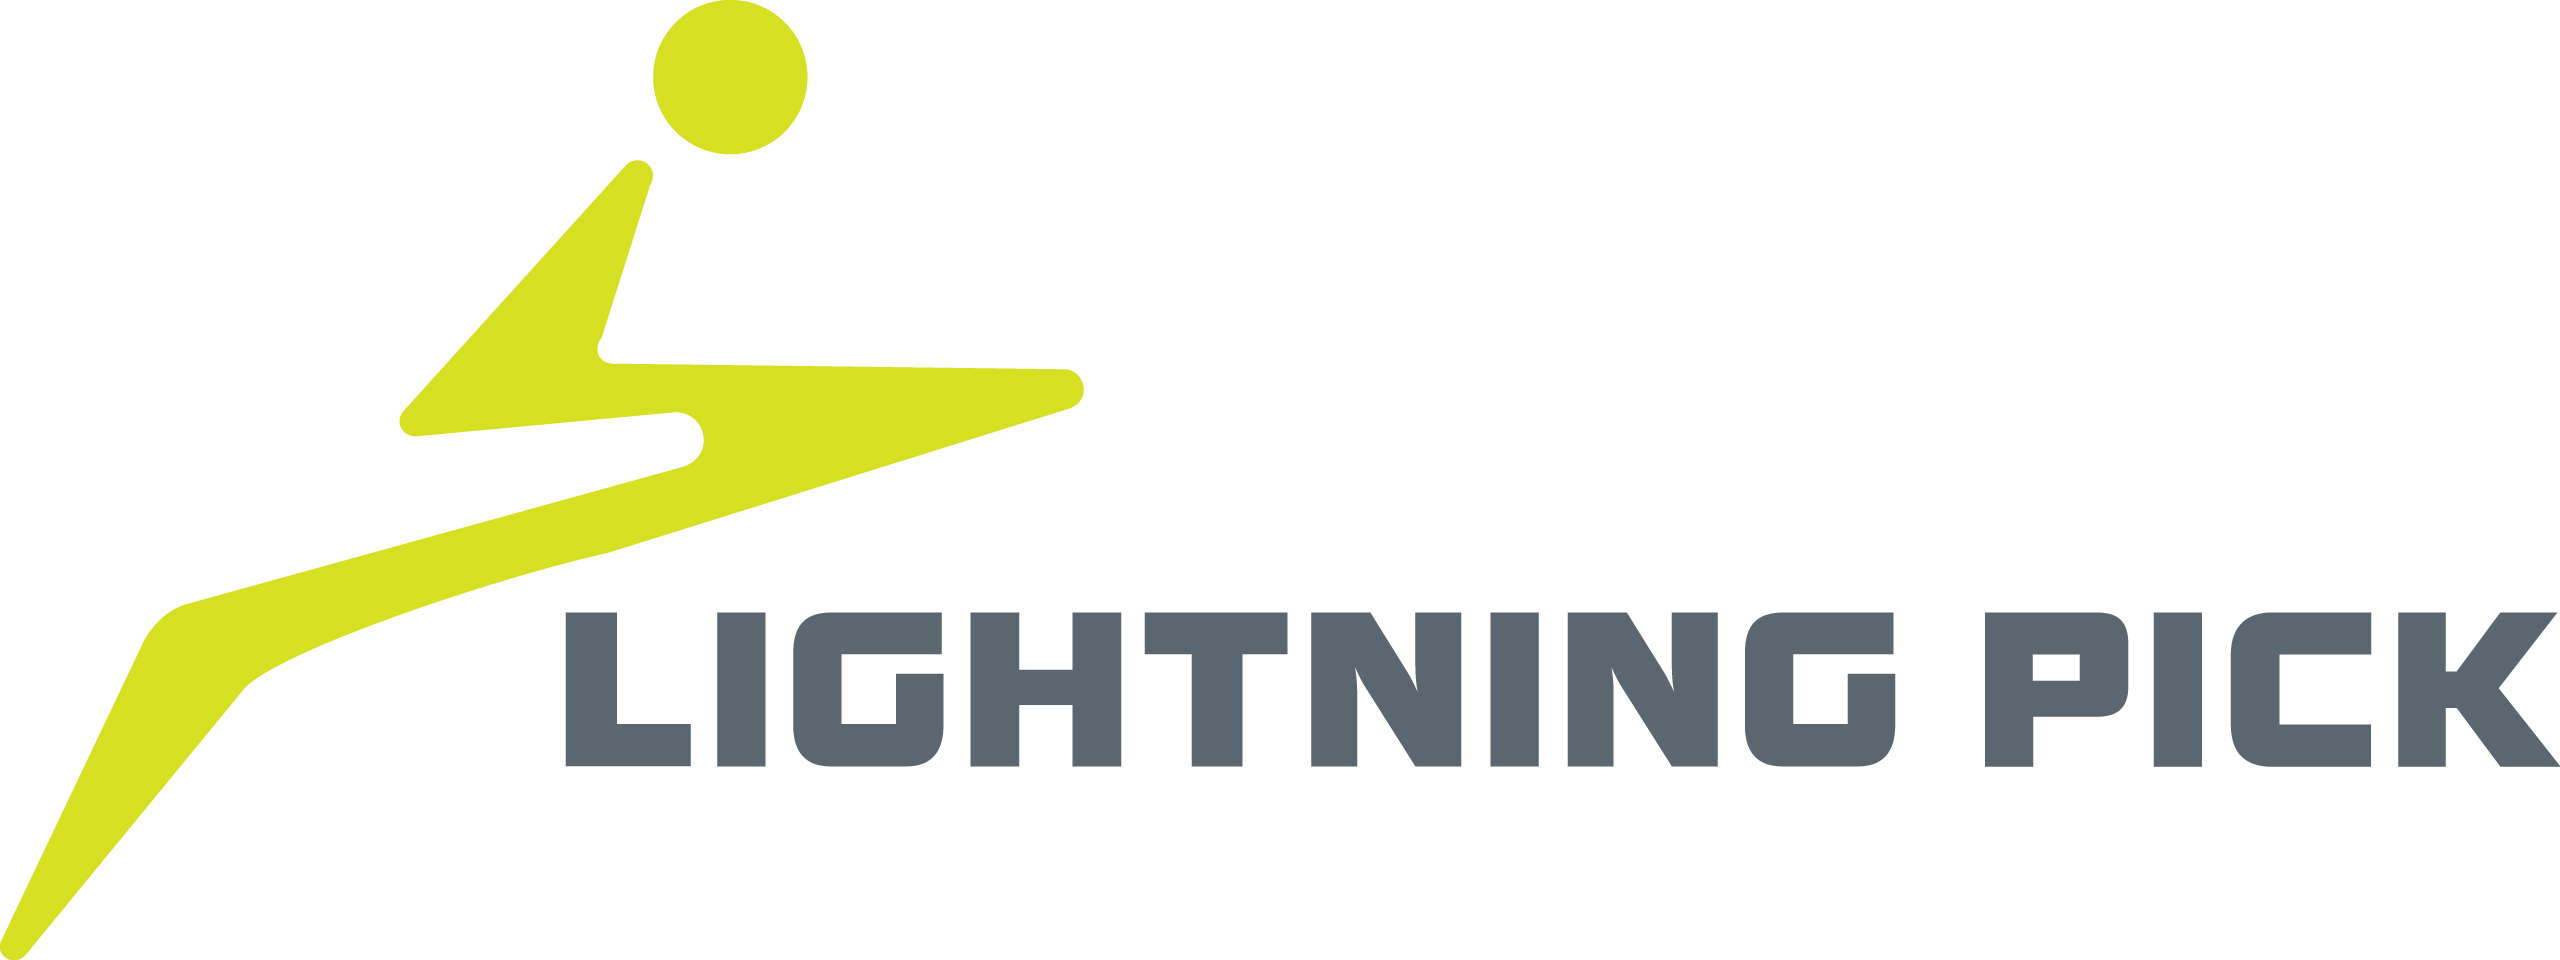 Lightning Pick Logo Retina